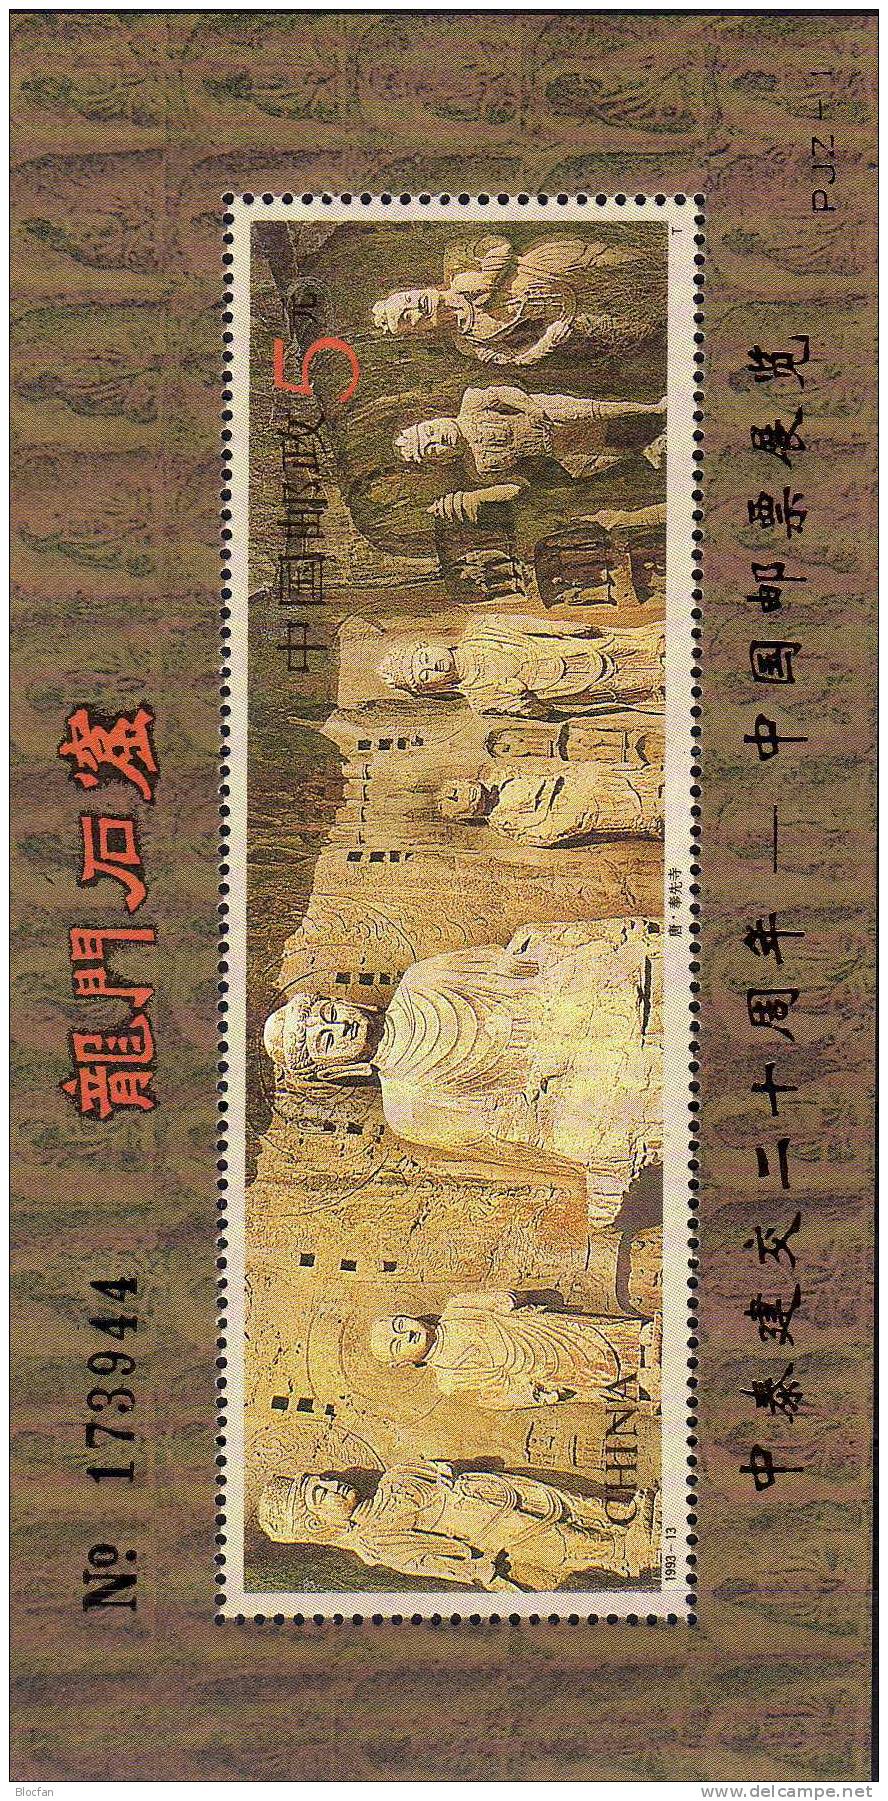 Expo Bangkok 1995 China 2496 AD,bloc 63 I+No.** 40€ overprint in gold on skulptur cave-tempel of Longmen-ravine bf Chine